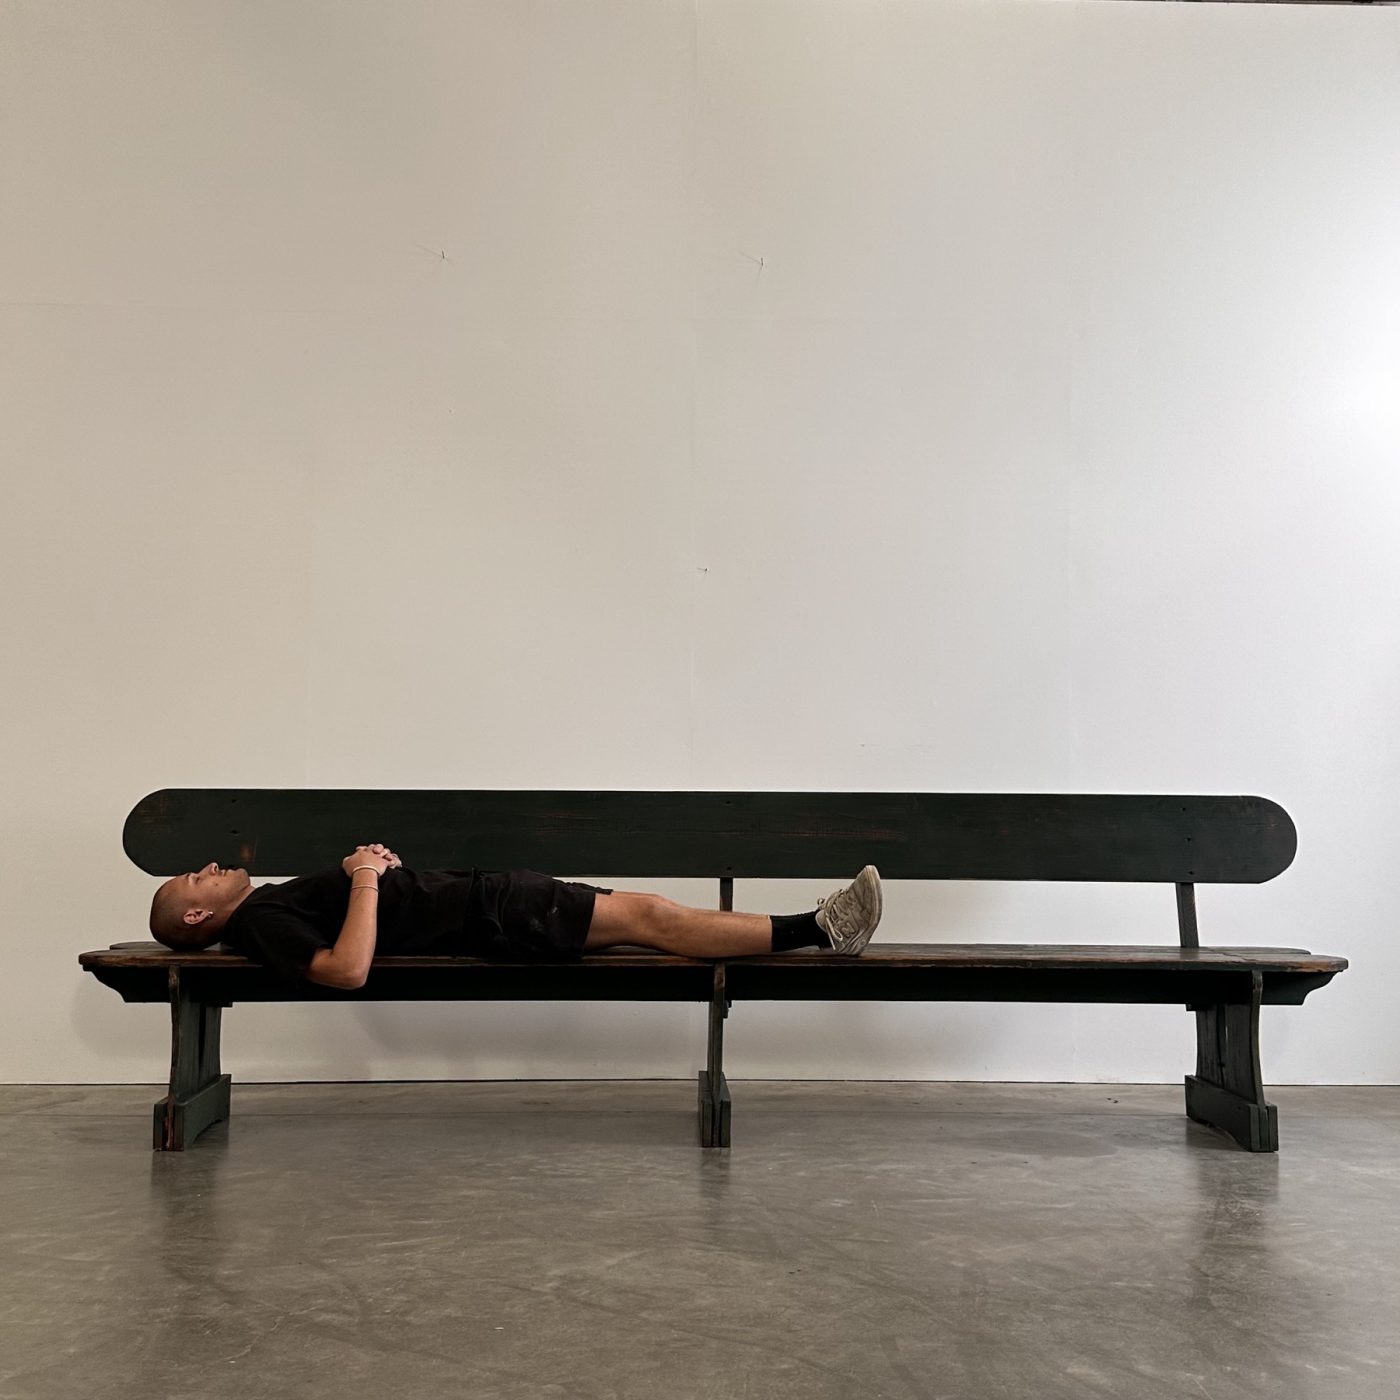 objet-vagabond-painted-bench0005